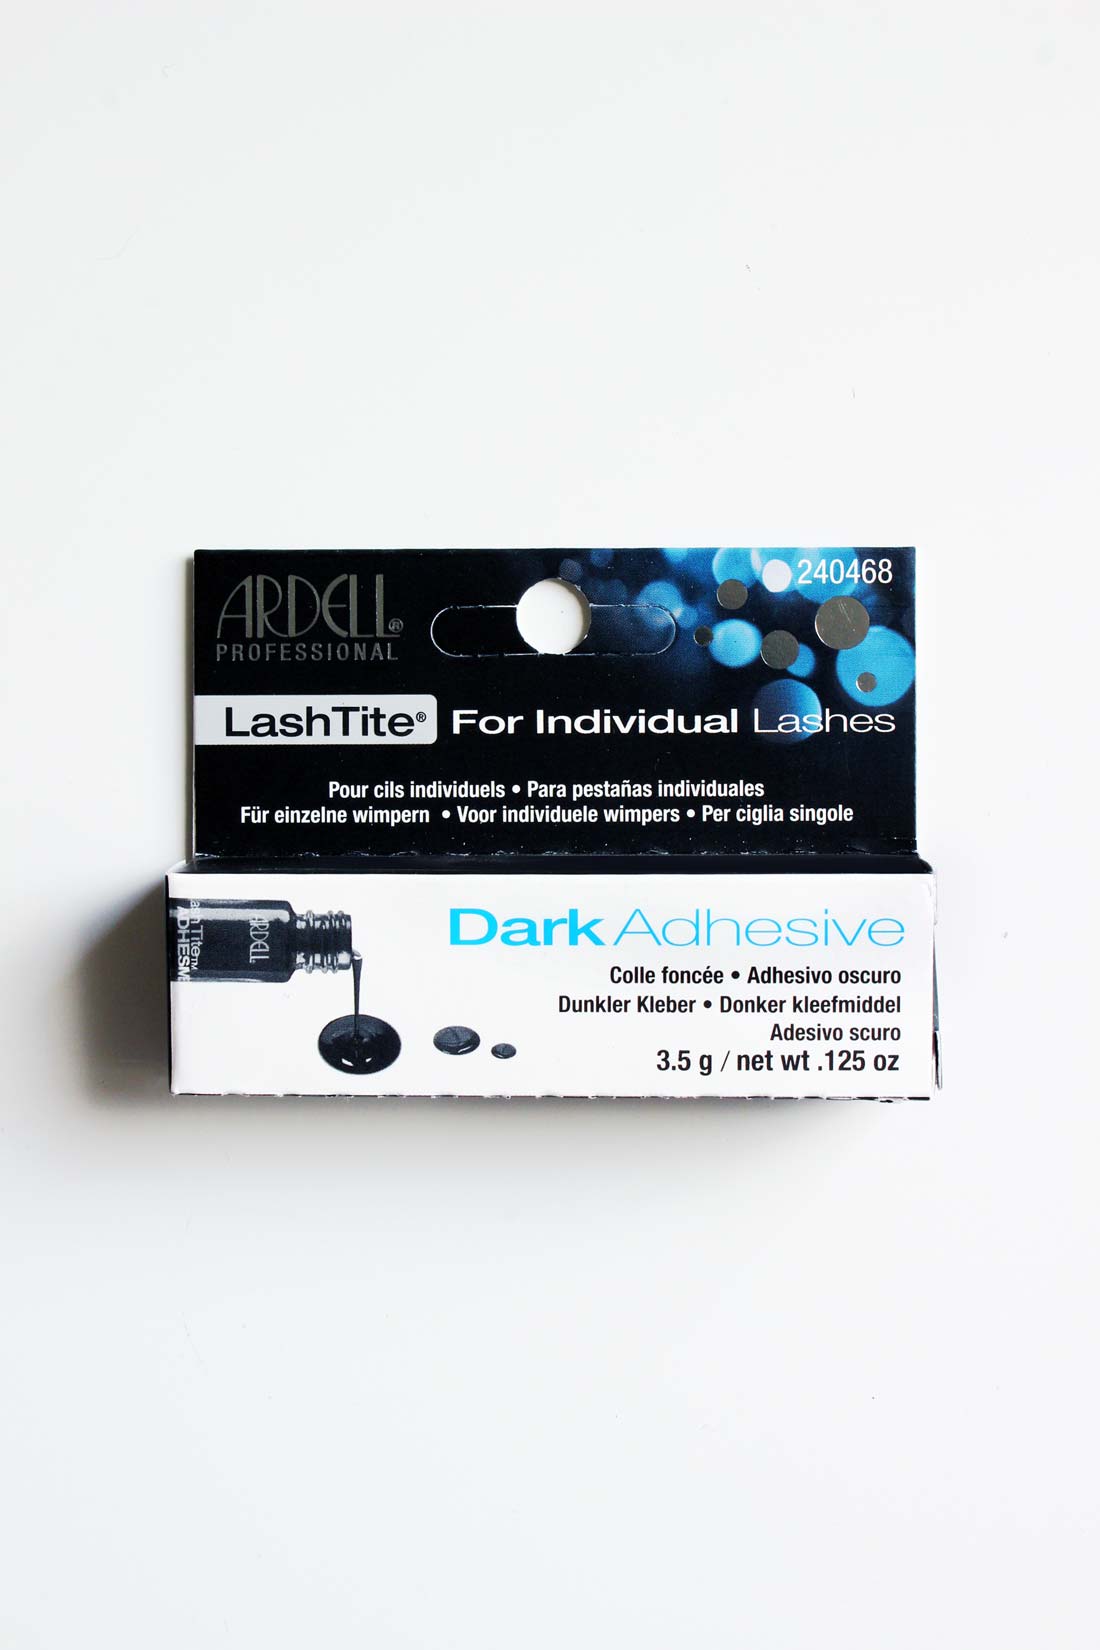 Dark Adhesive for Individual Lashes